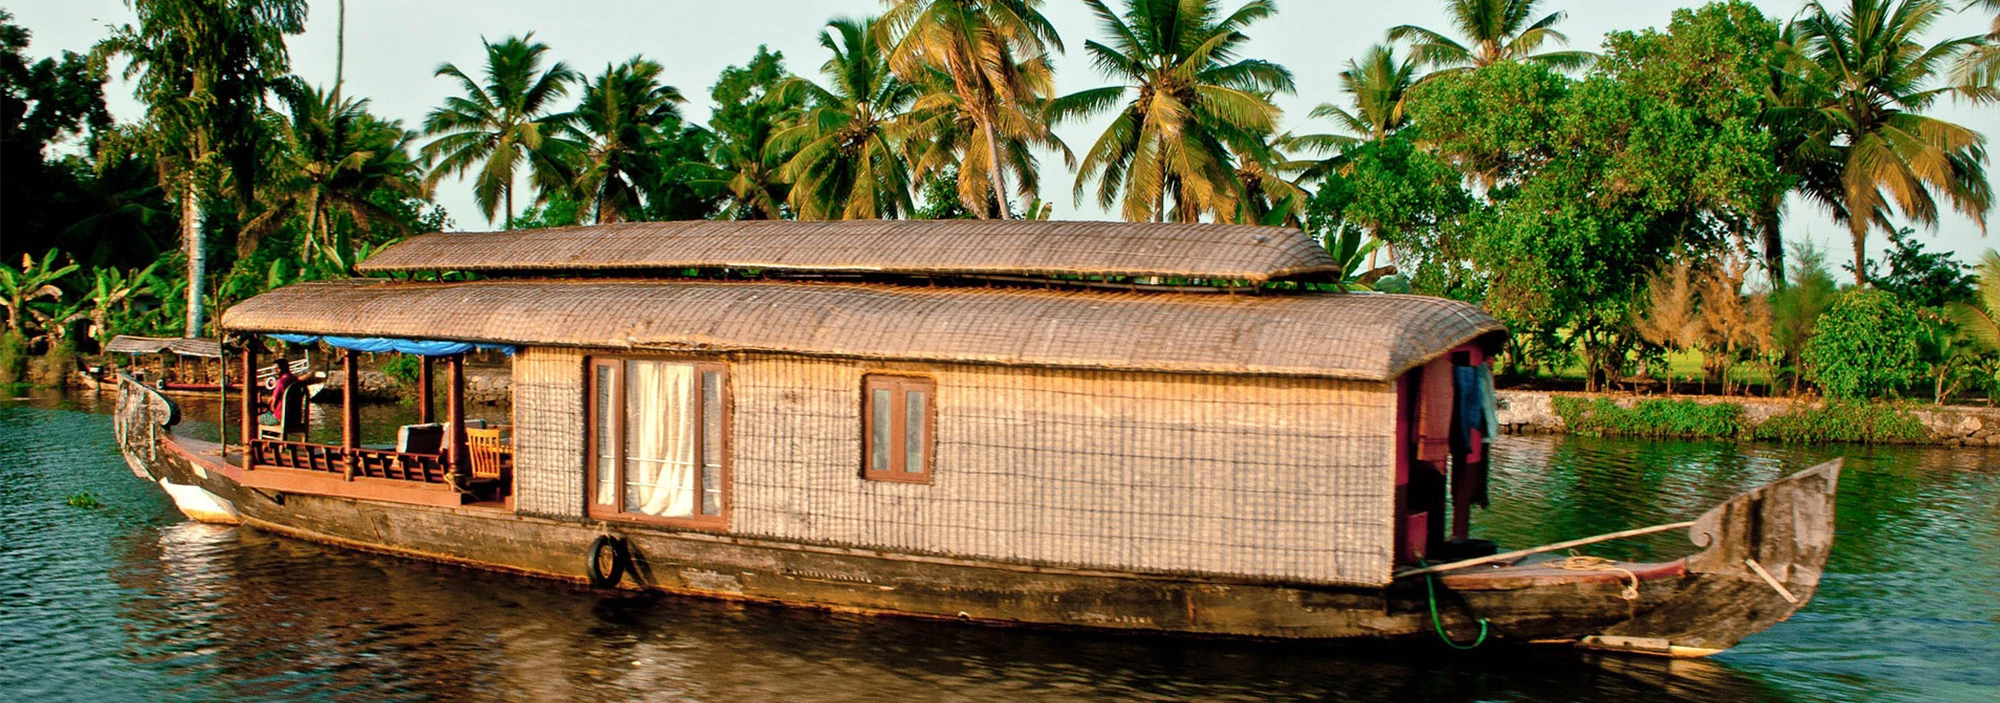 Kerala-Houseboat-Tour